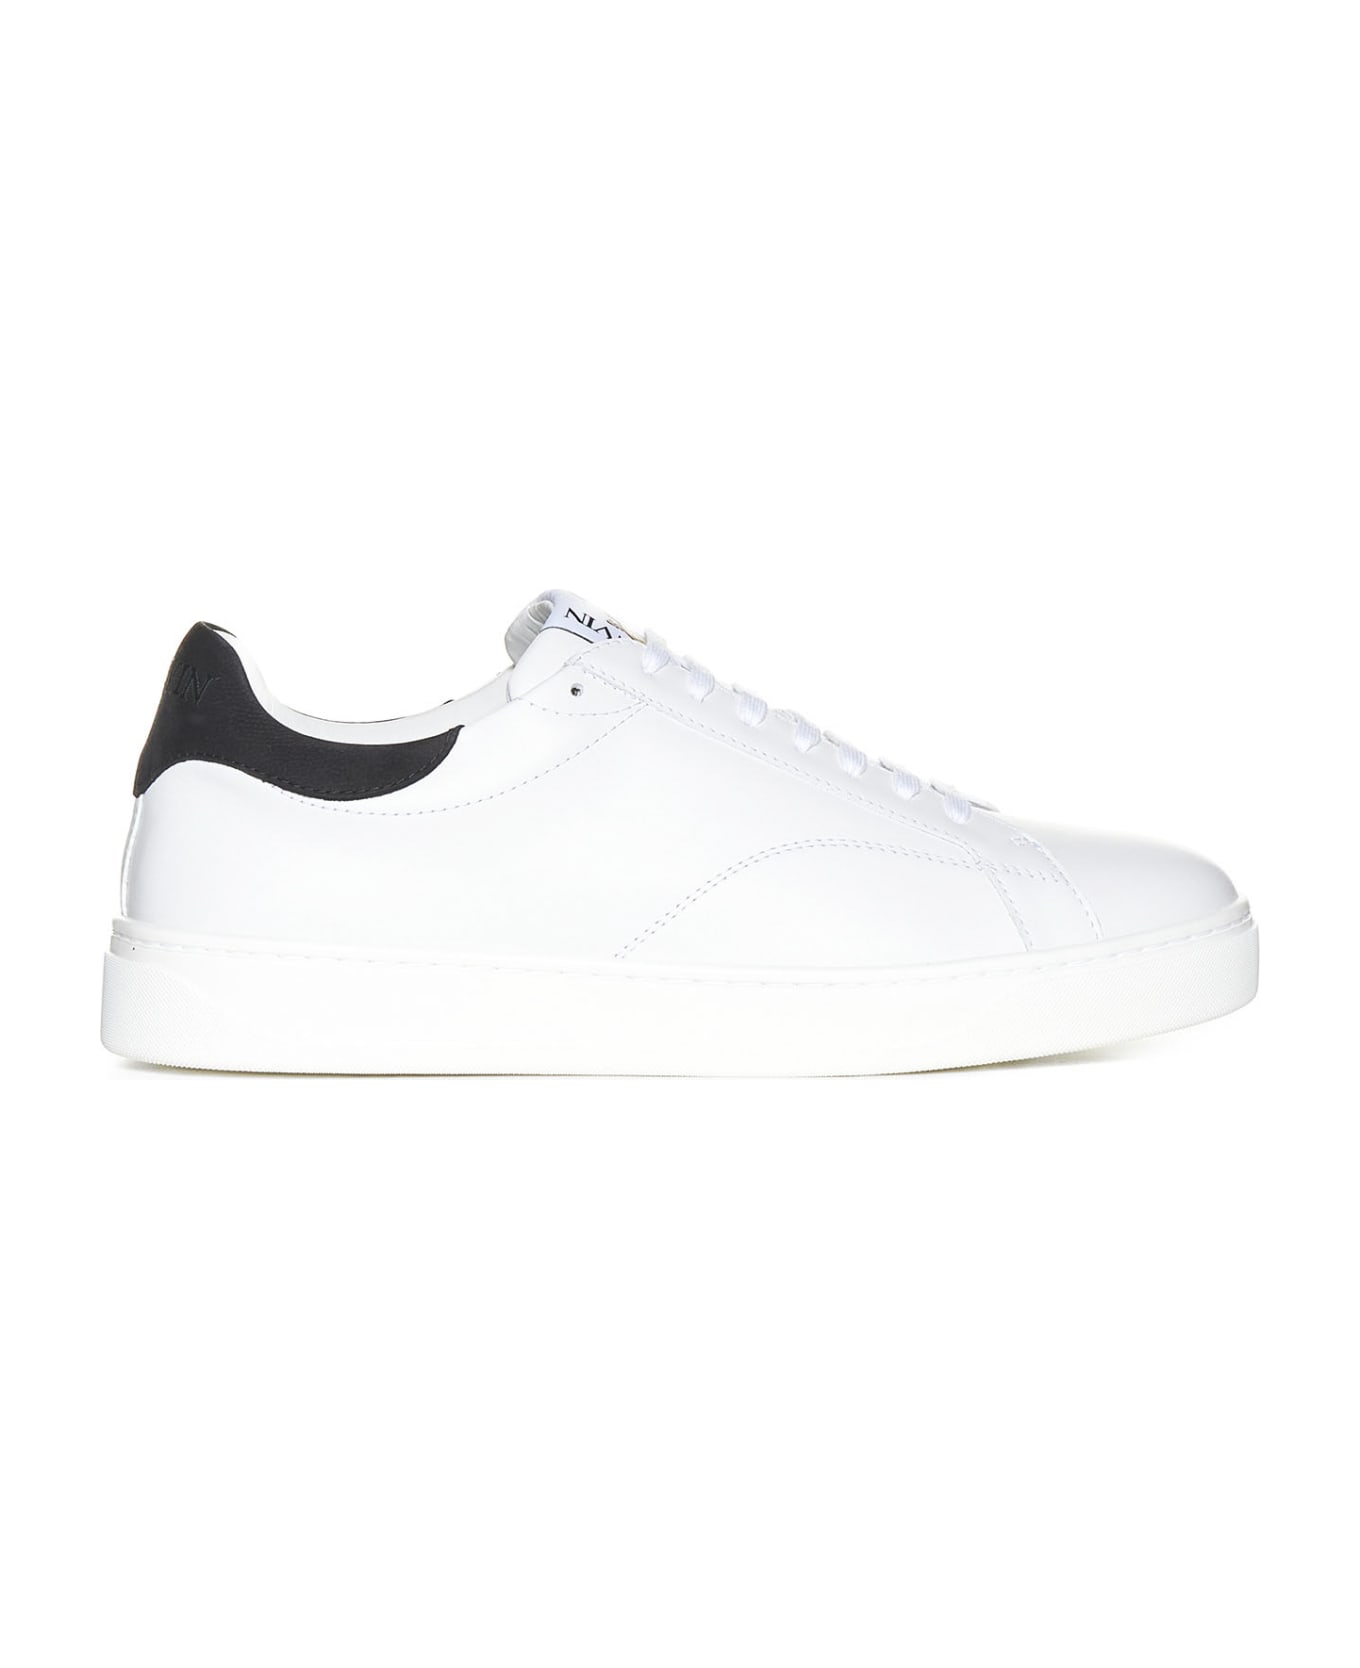 Lanvin Sneakers - White Black